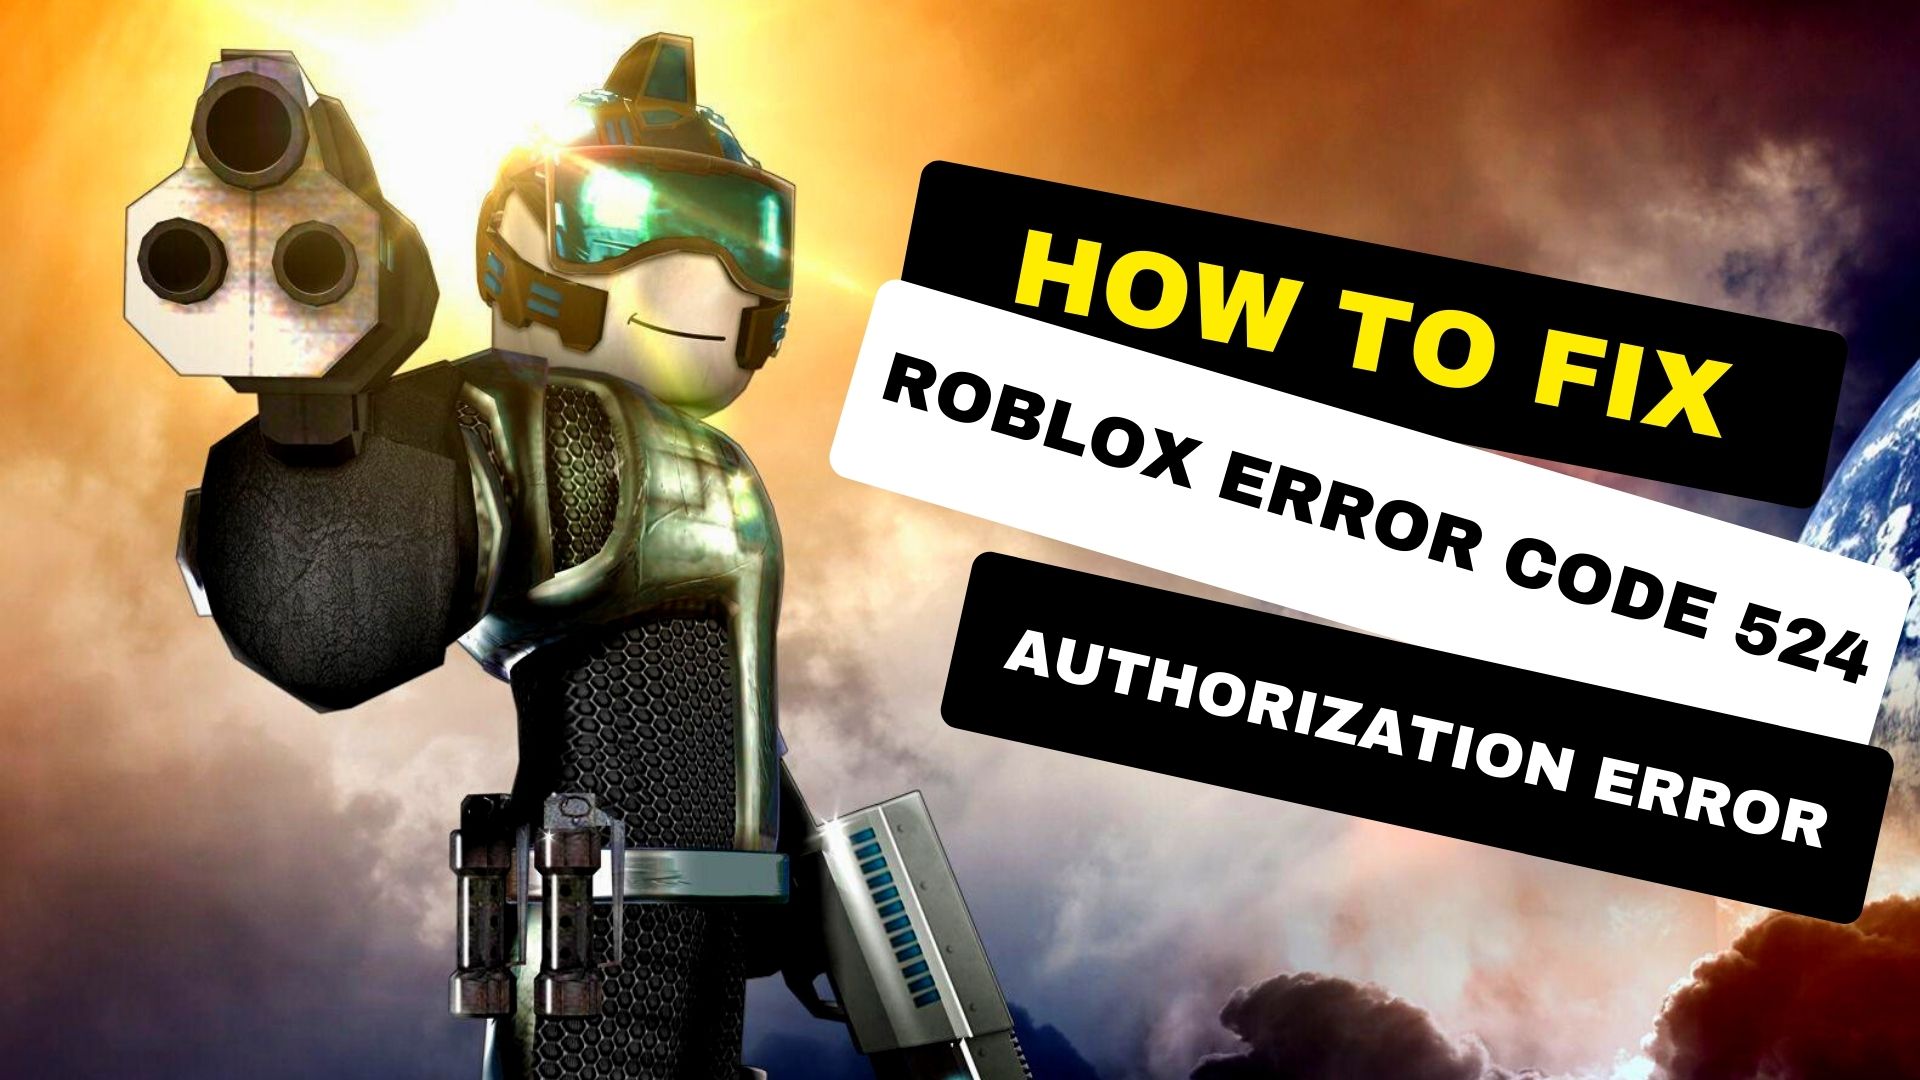 Fix ROBLOX Error Code 524